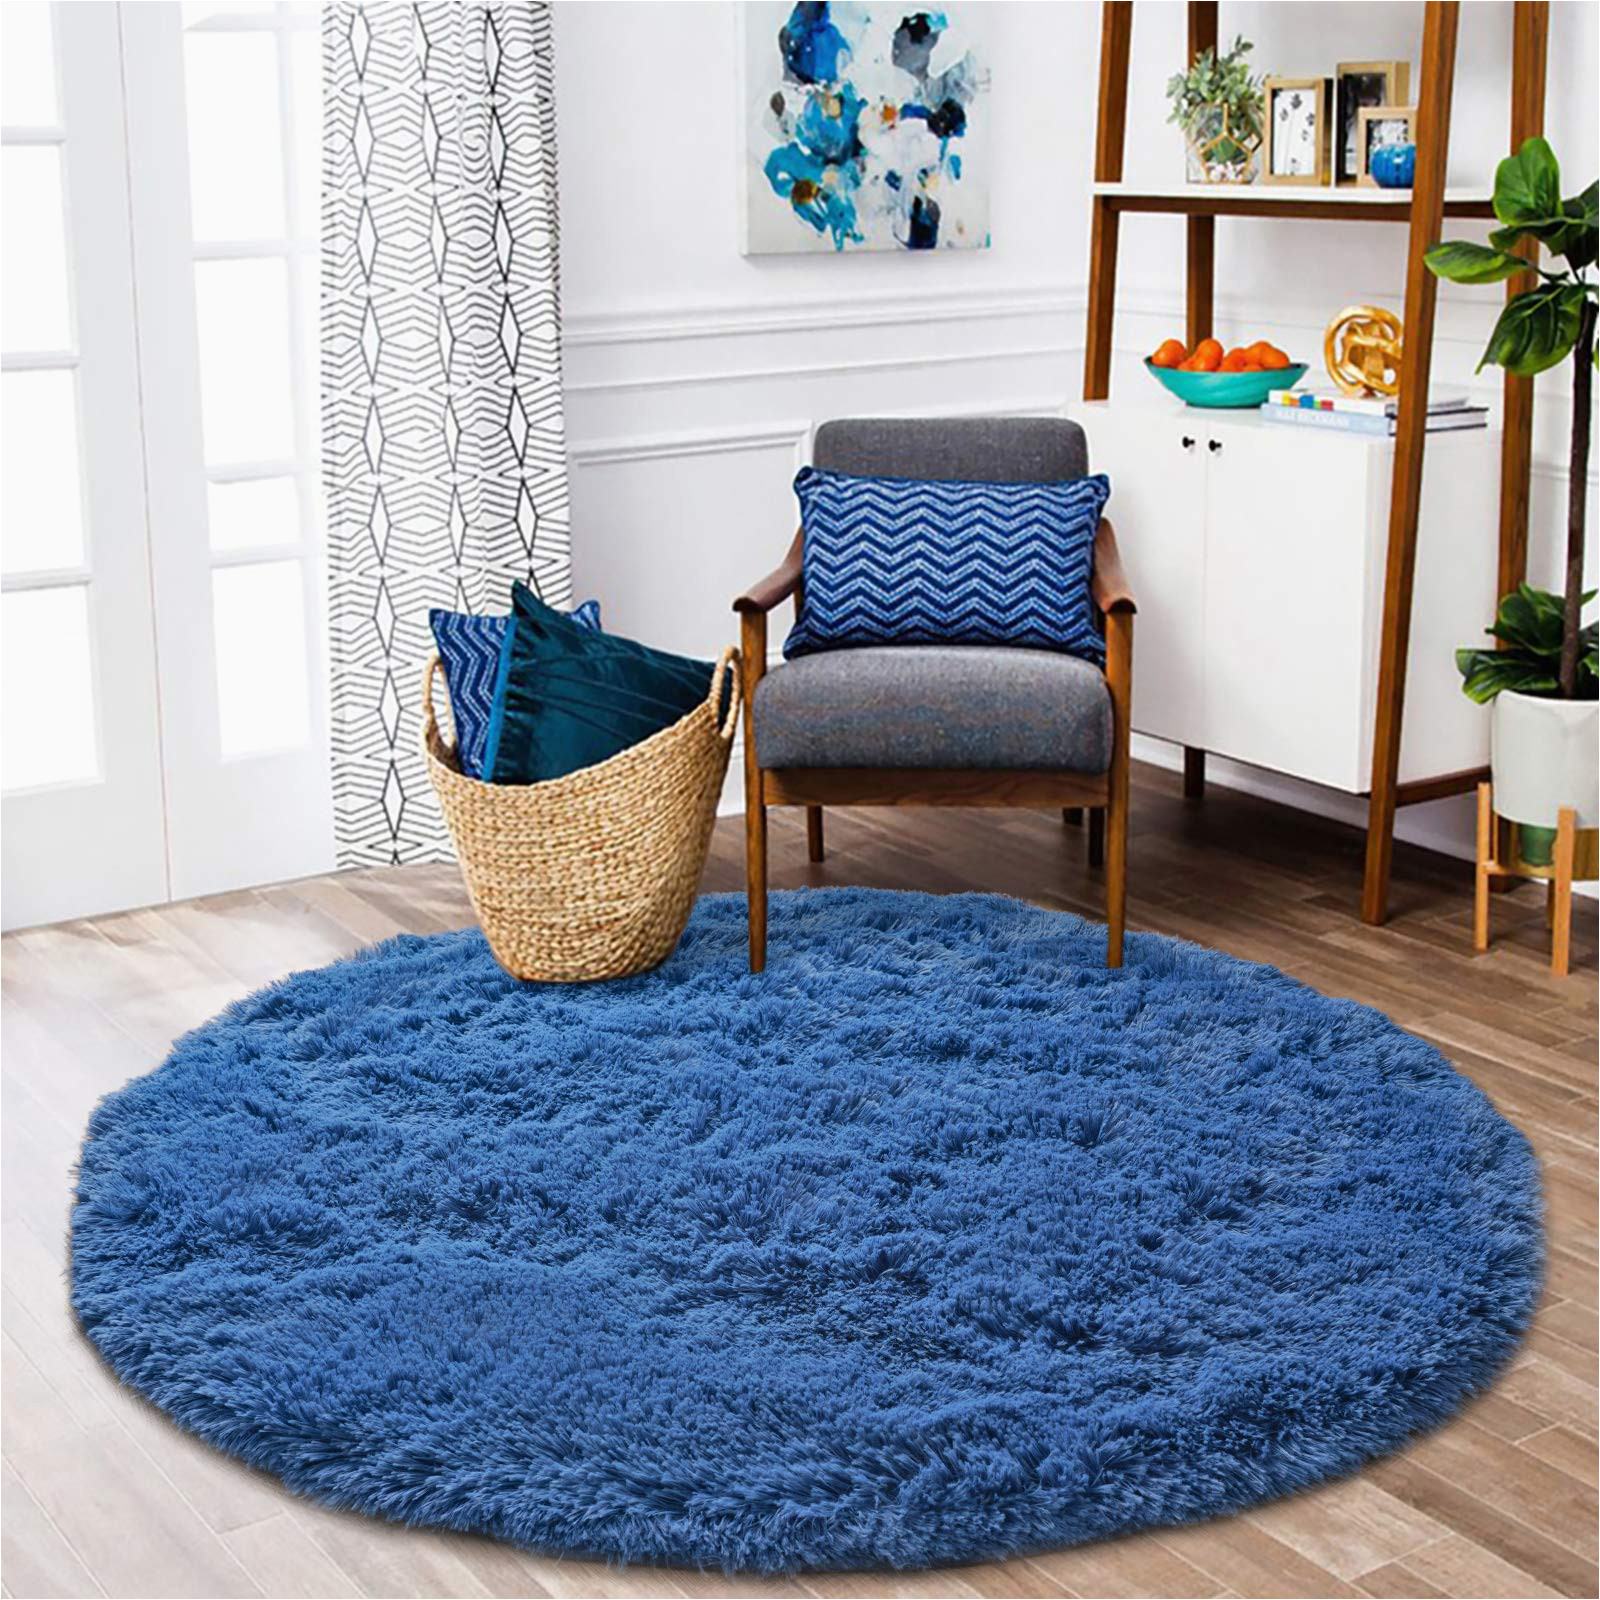 Small Round Blue Rug iseau Fluffy Round Rug Carpets, Modern Shaggy Circle Rug for Kids Bedroom Extra Comfy Cute Nursery Rug Small Circular Carpet for Boys Girls Room Home …